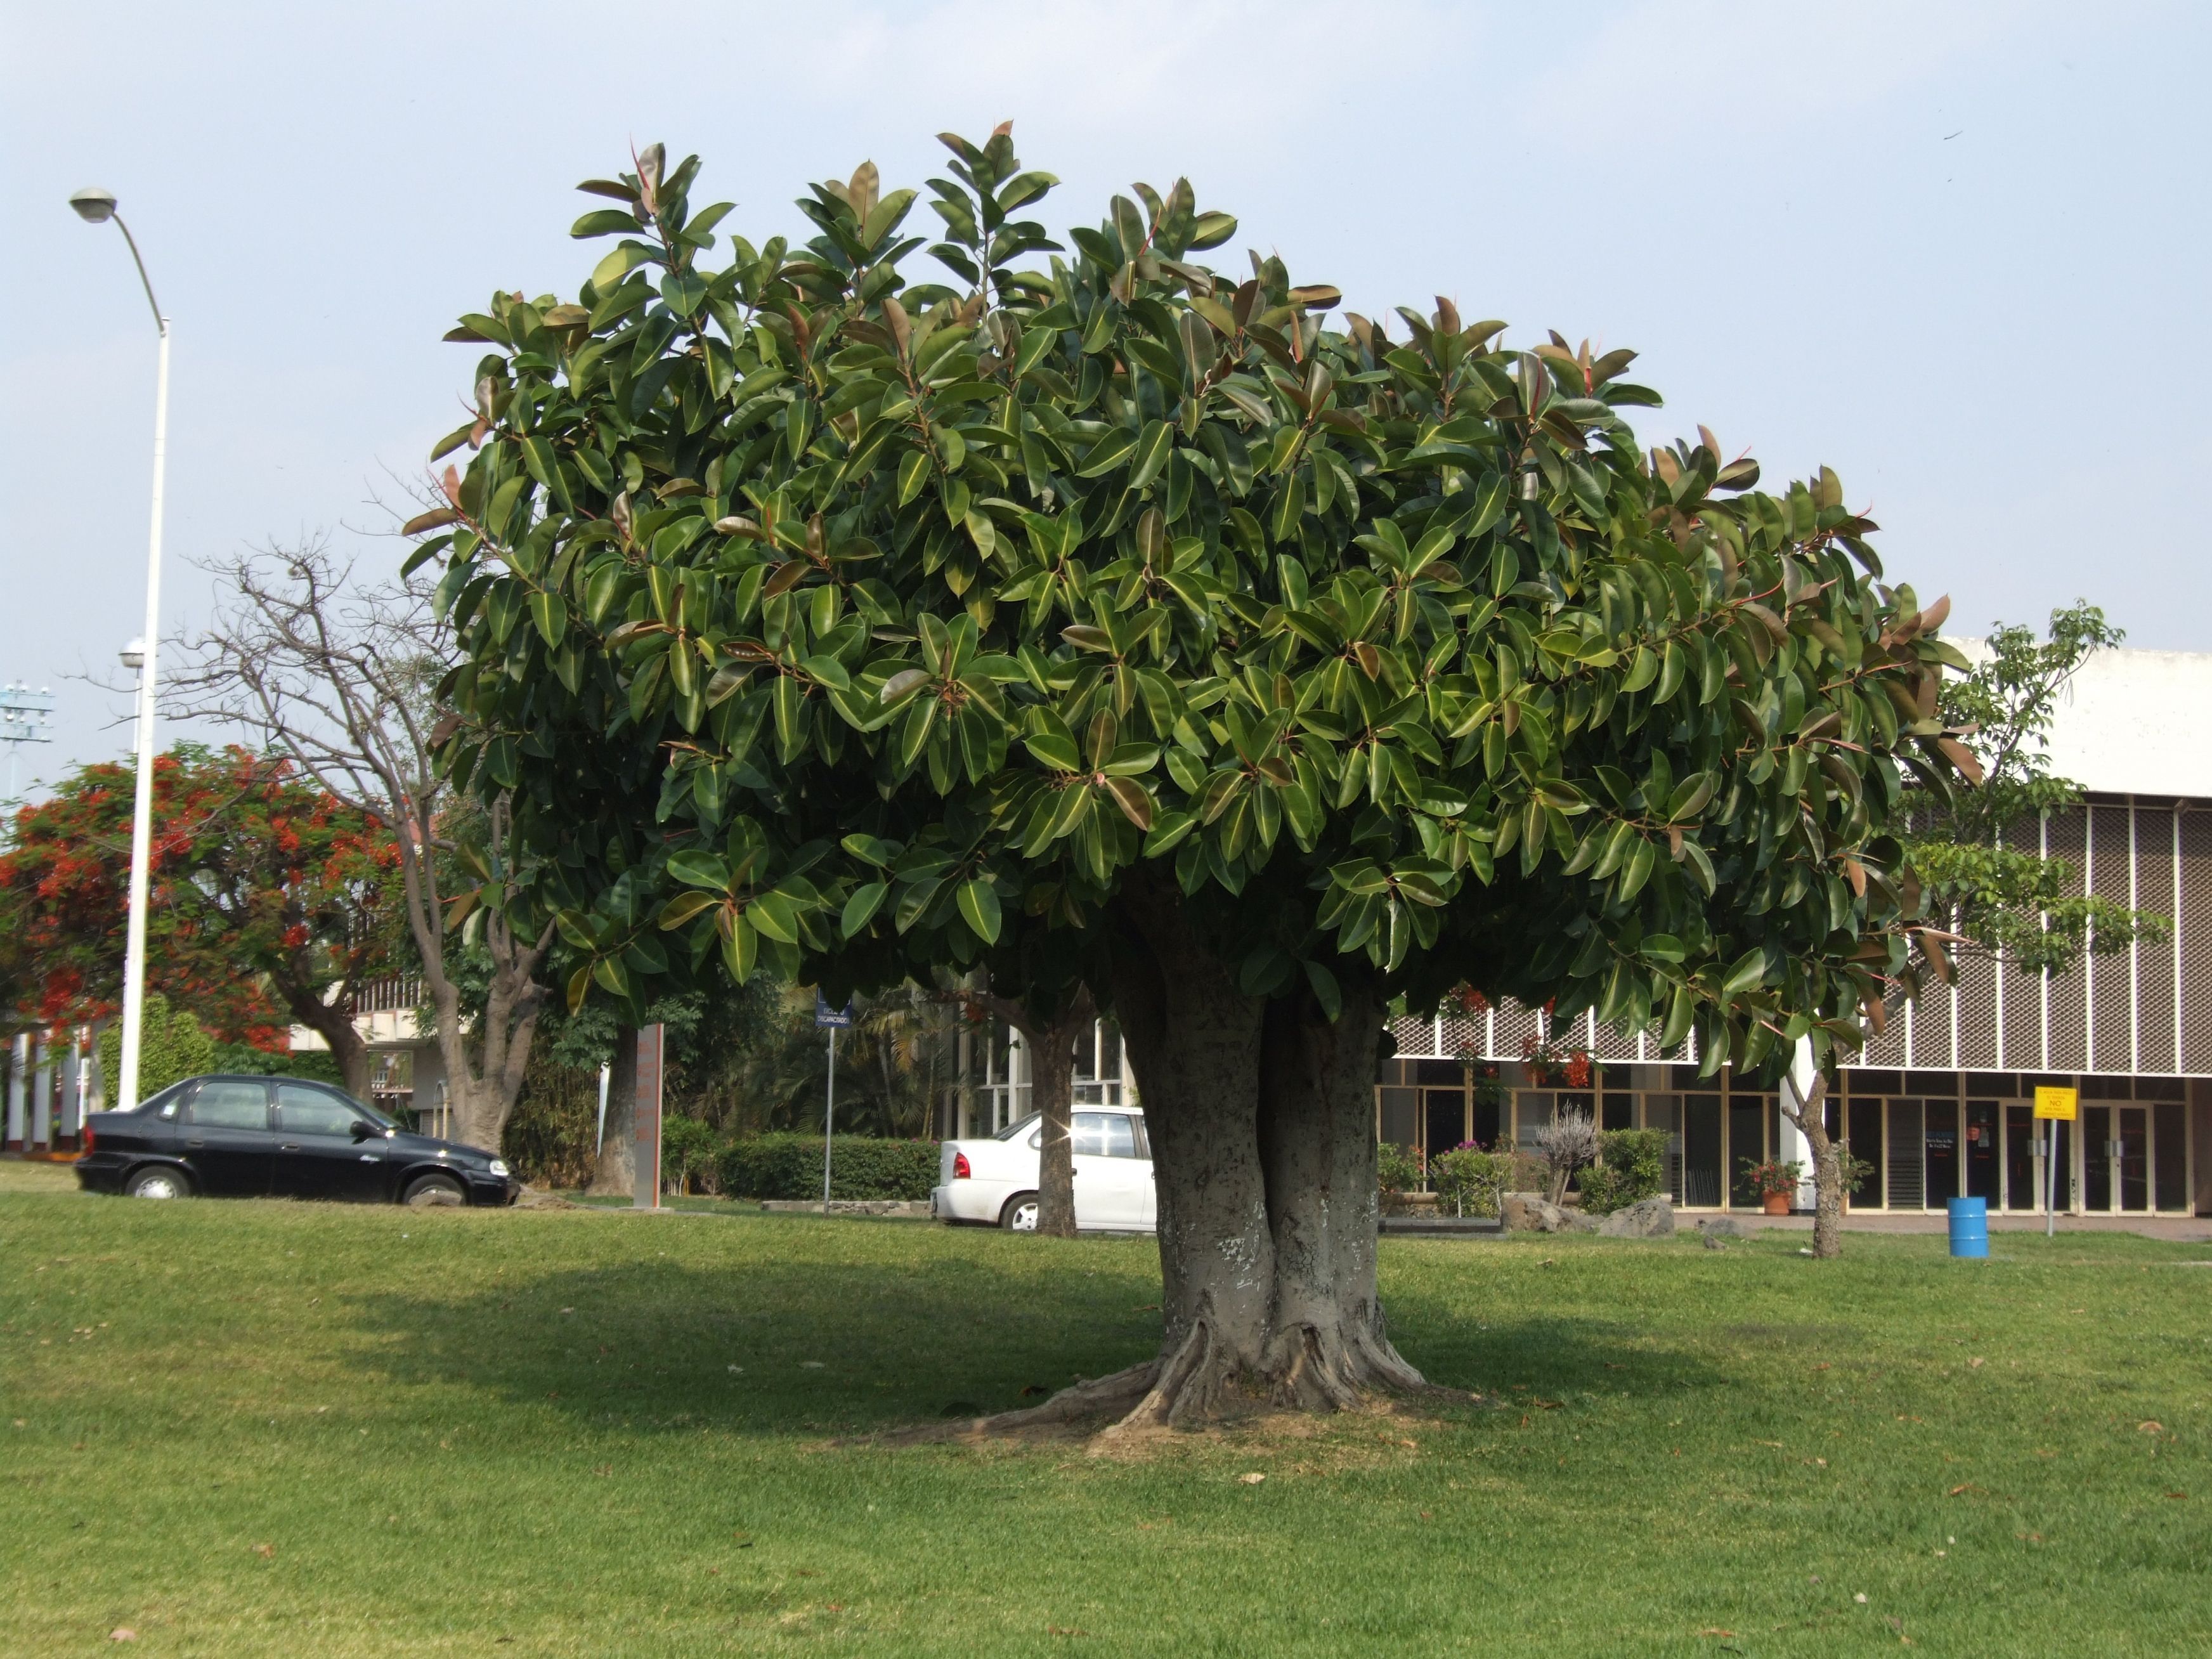 File:Rubber tree (1).jpg - Wikimedia Commons